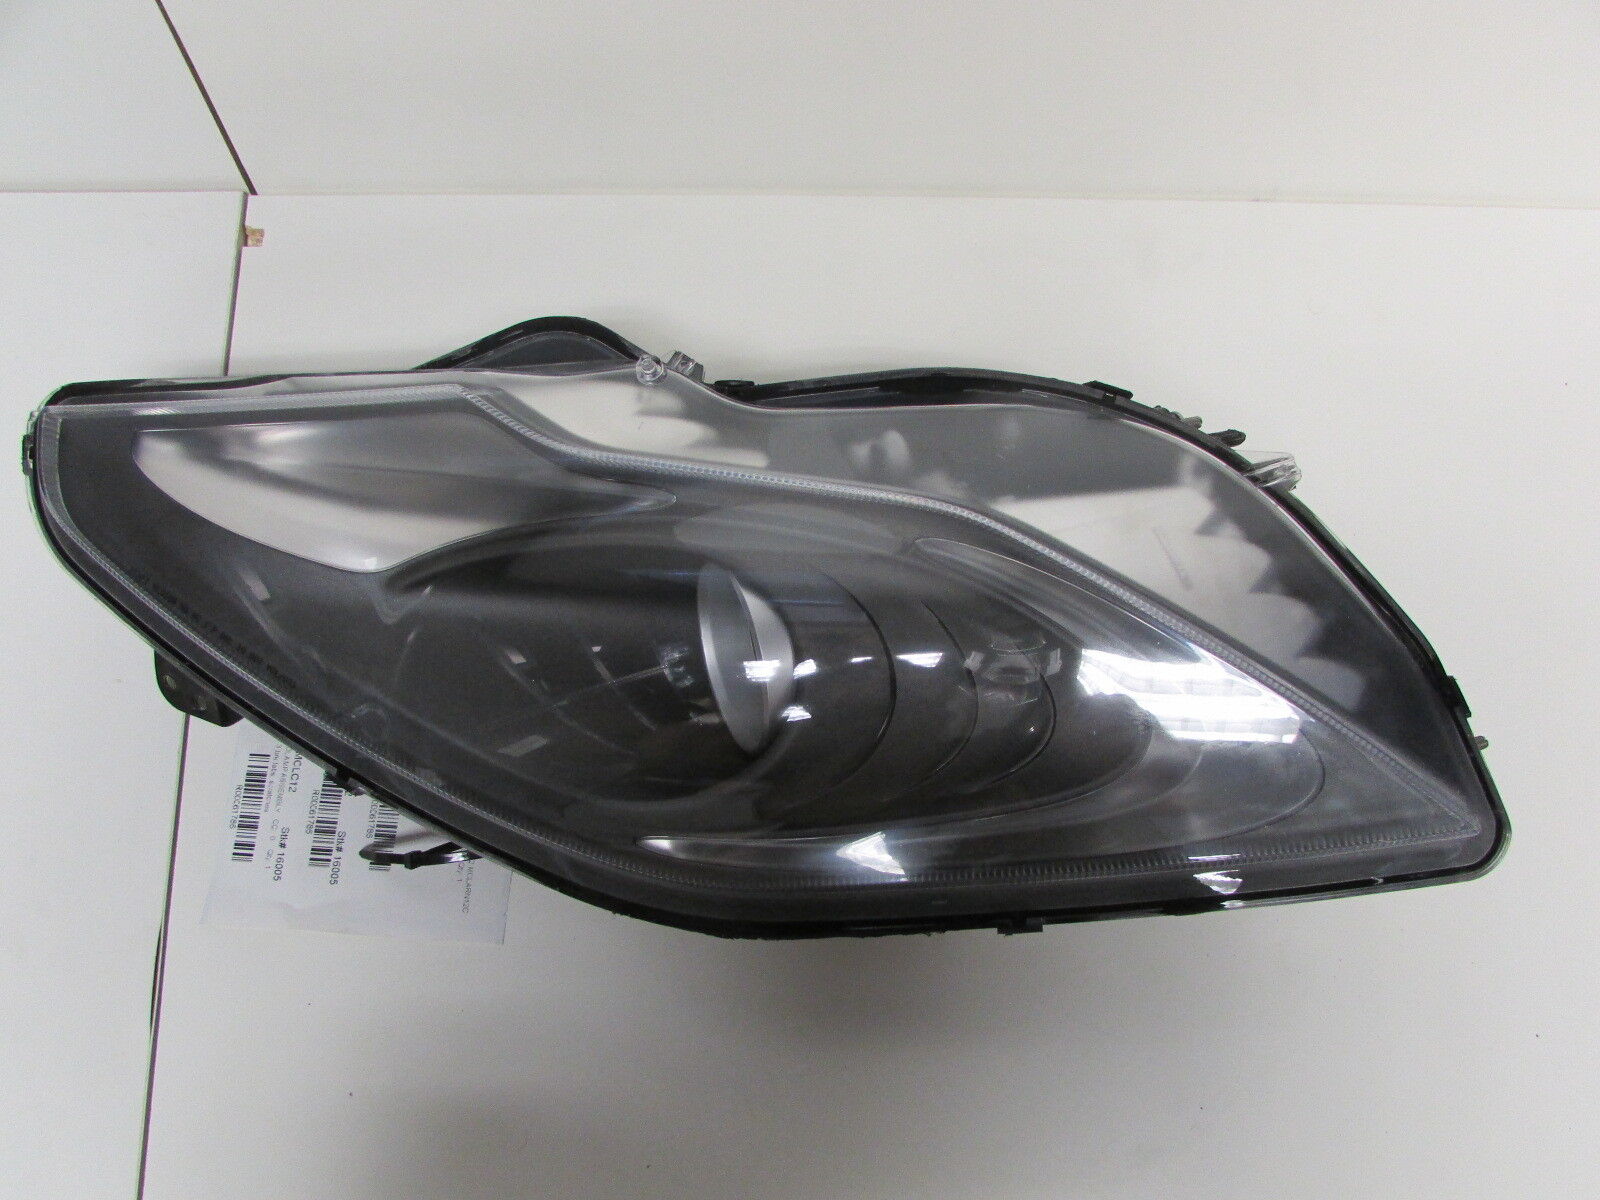 McLaren MP4-12C, Left Headlamp/Headlight Assembly, Used, Broken Tab, Scratches